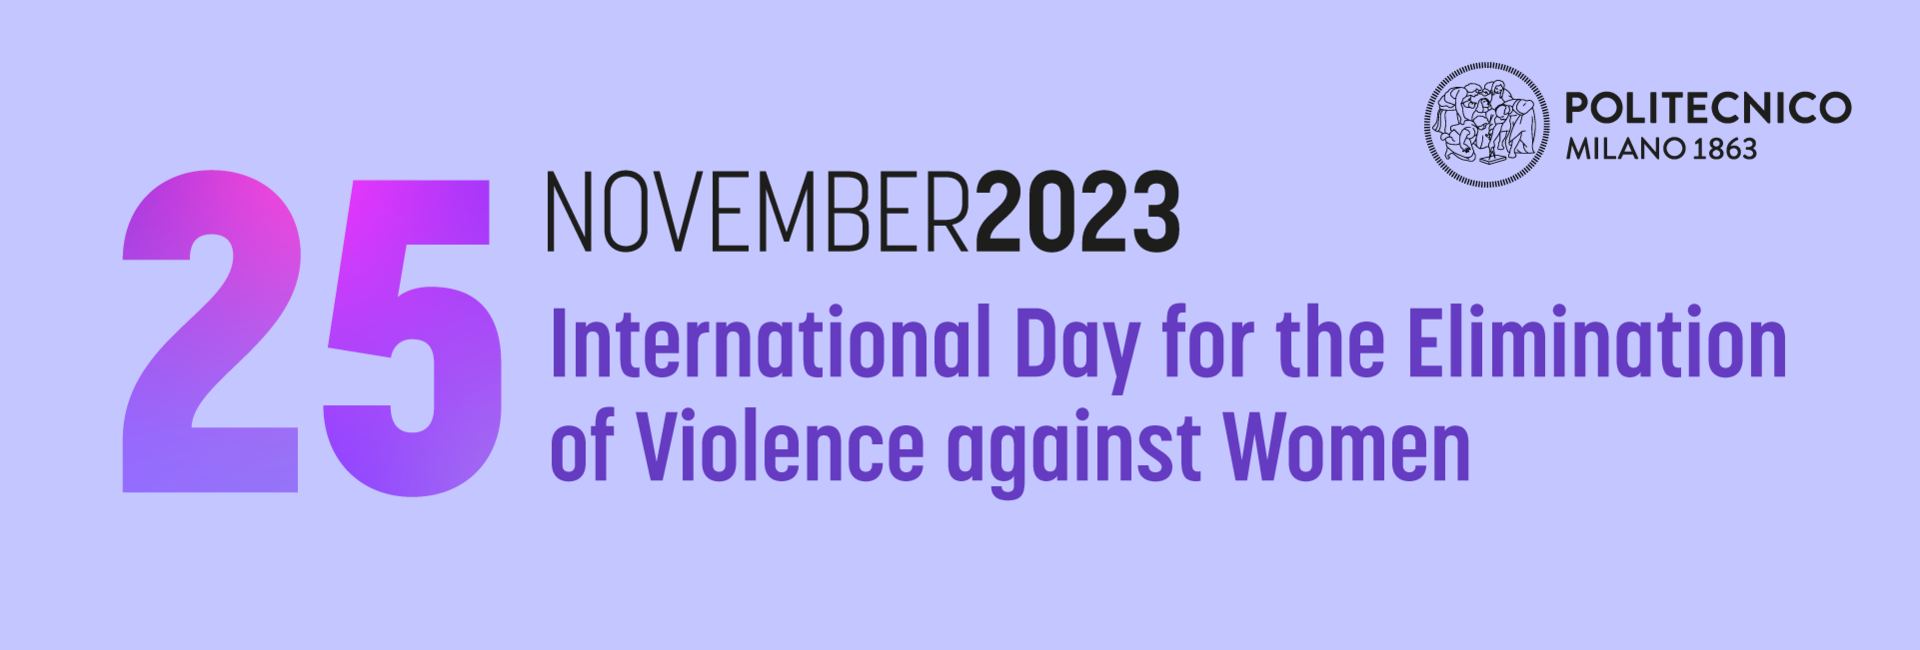 25 vovember 2023 - International Day for the Elimination of Violence against Women